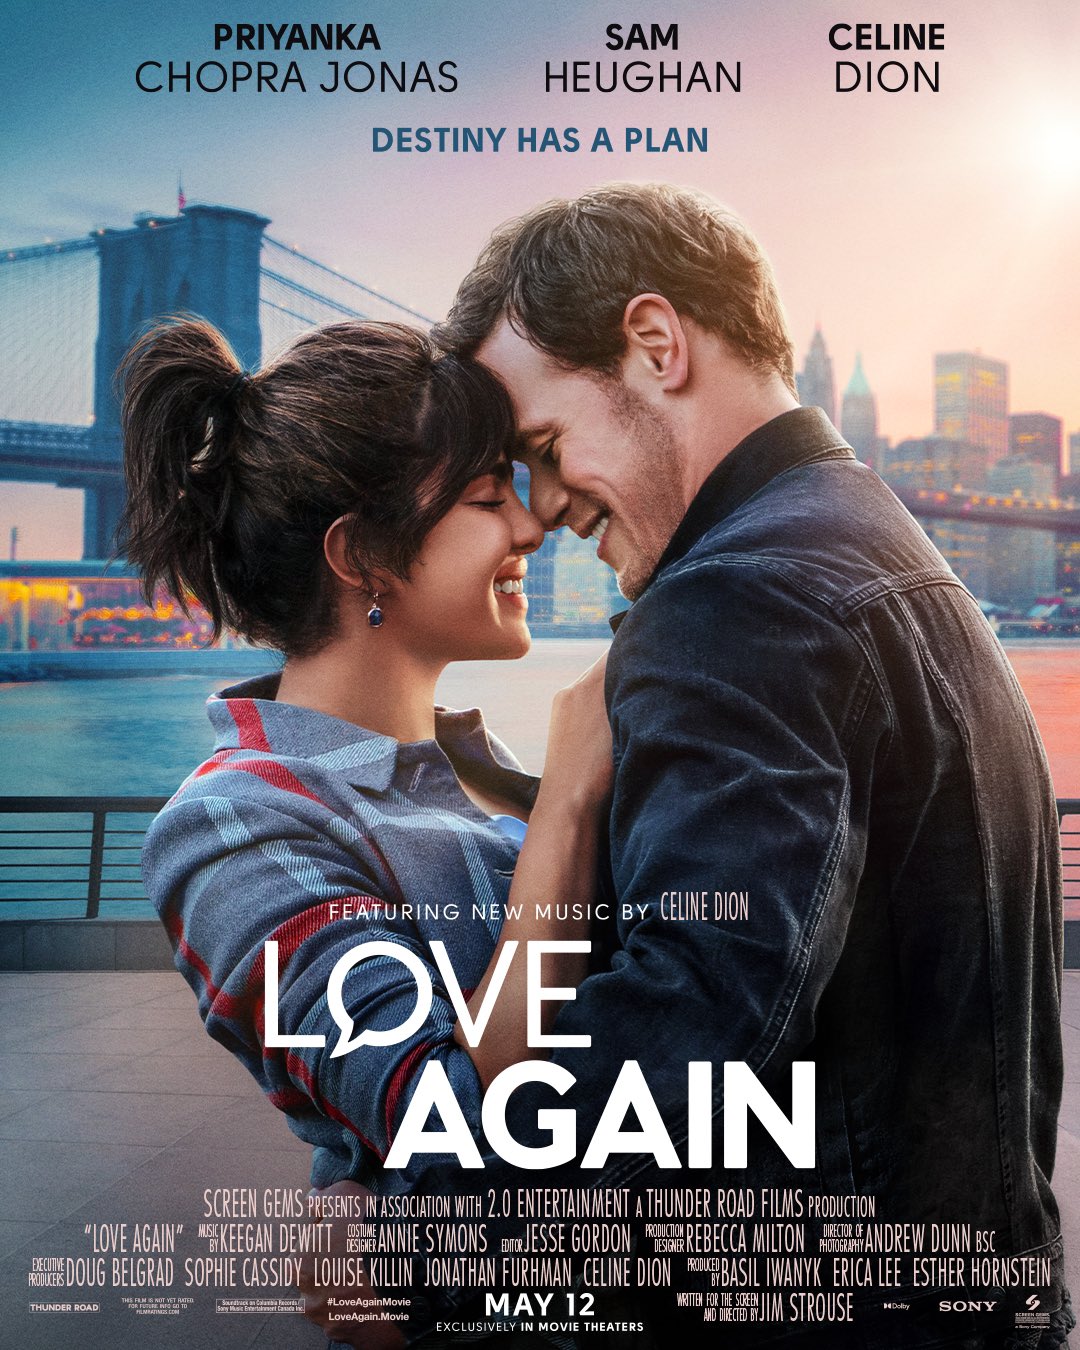 love again rom com pelicula romantica celine dion stills4 poster